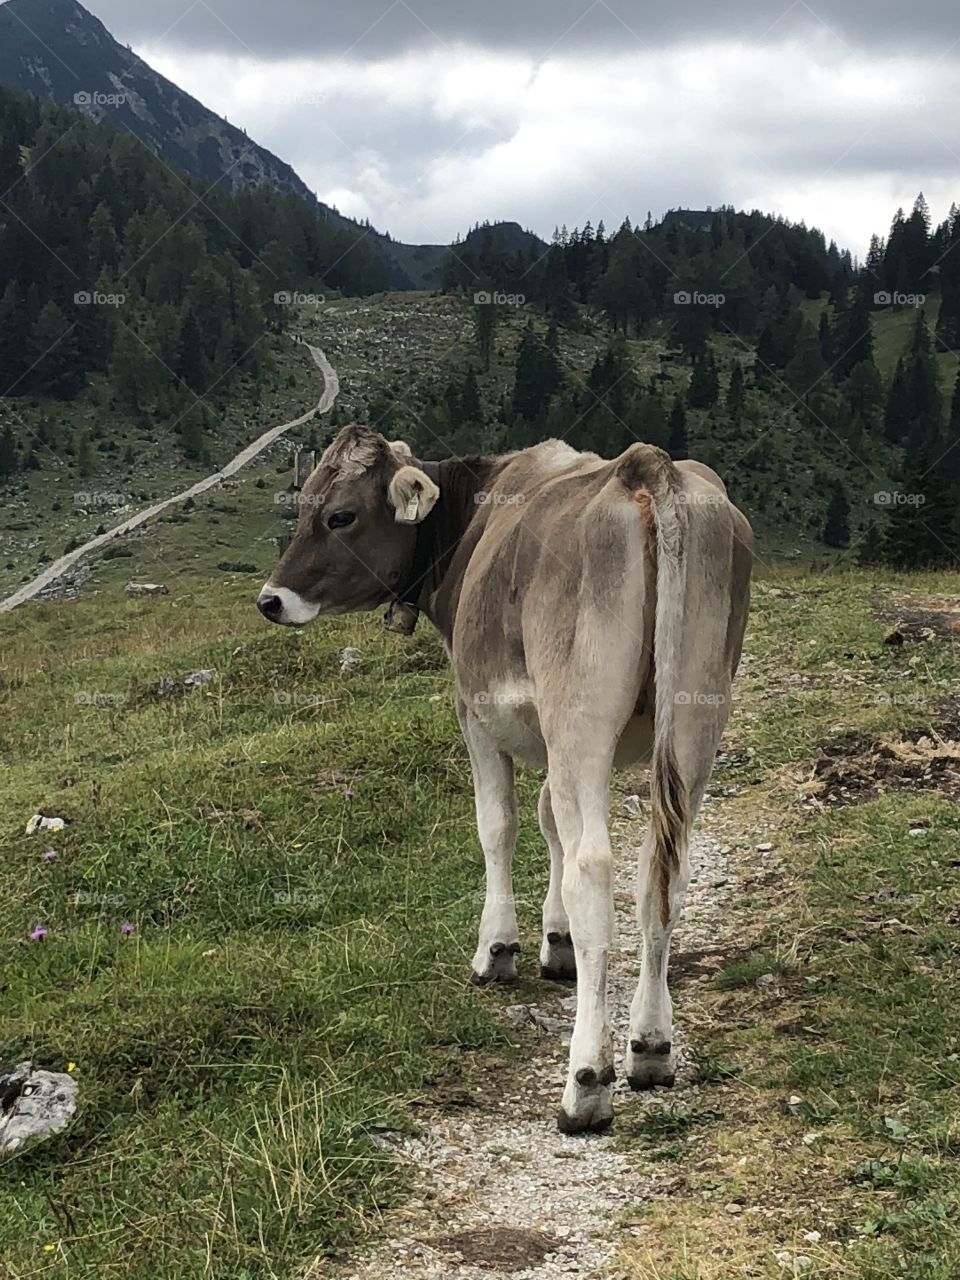 Cow on mountain path